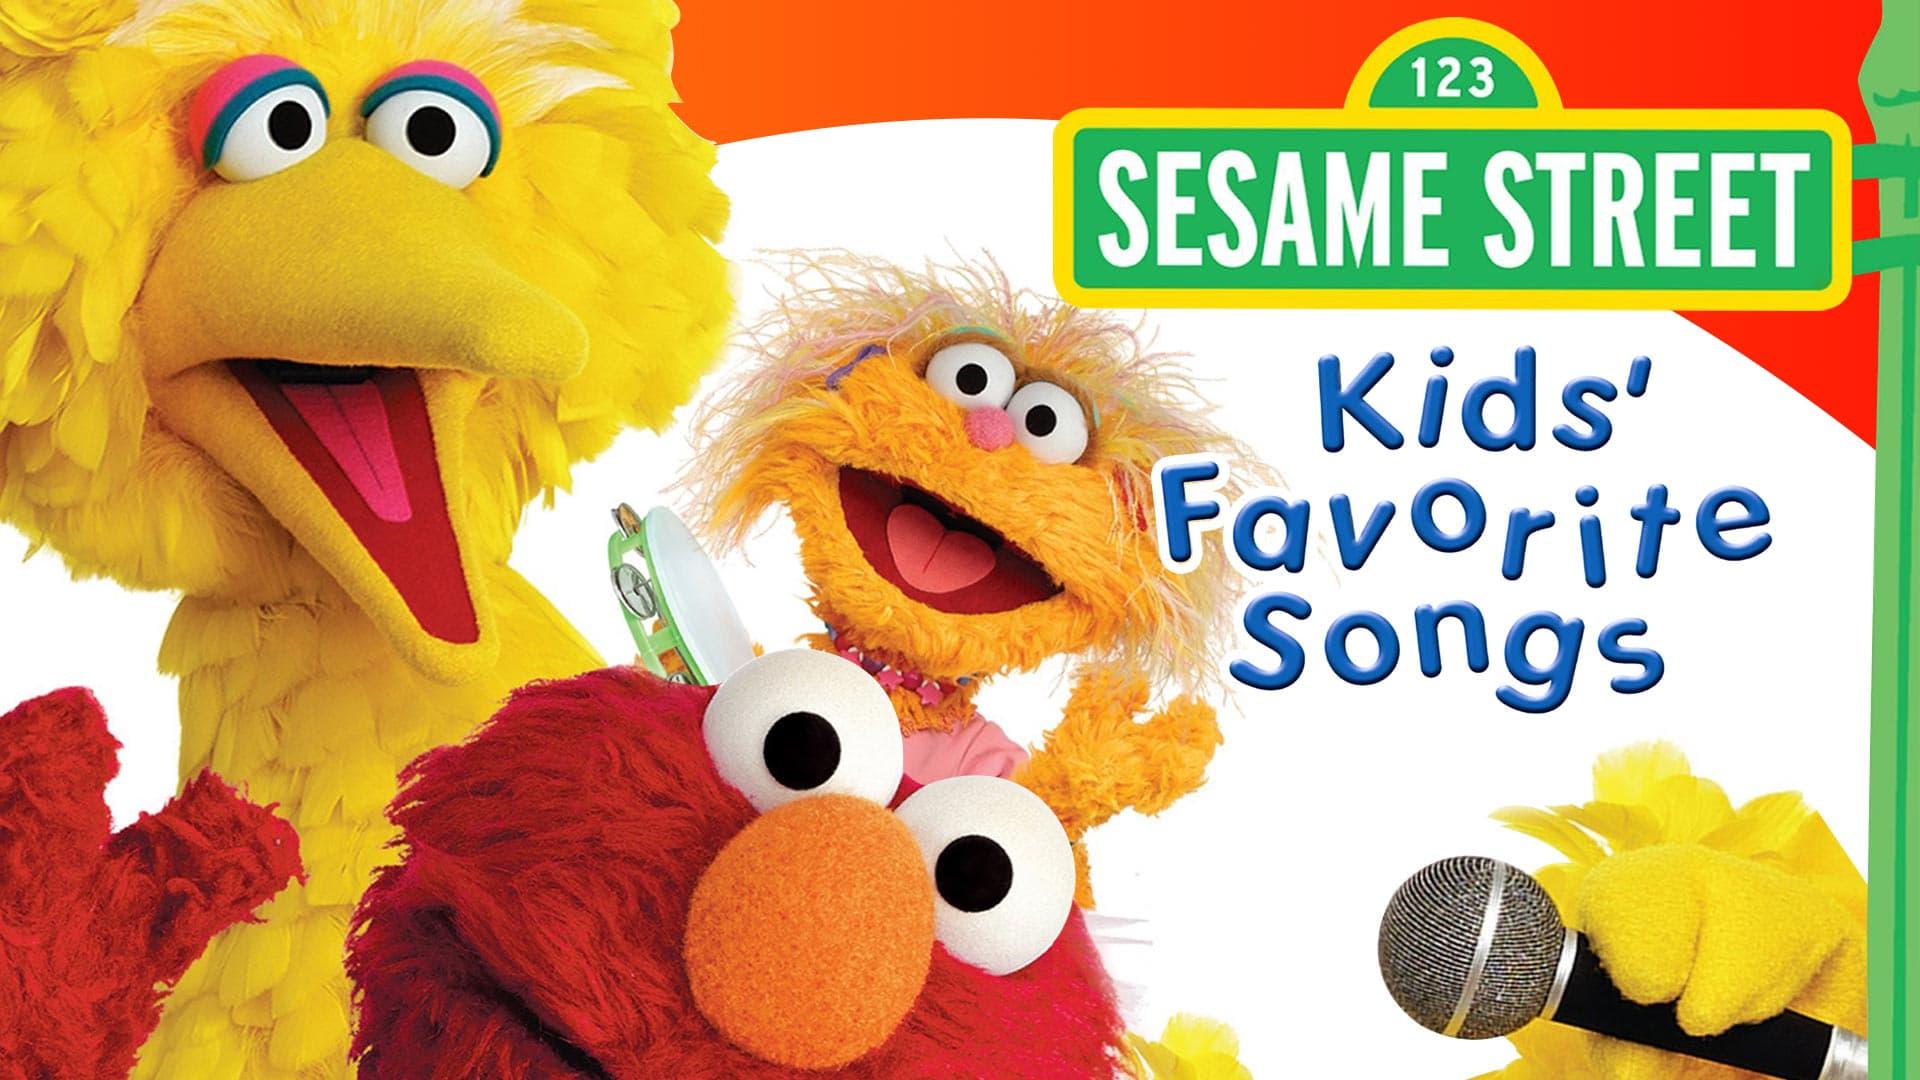 Sesame Street: Kids' Favorite Songs backdrop